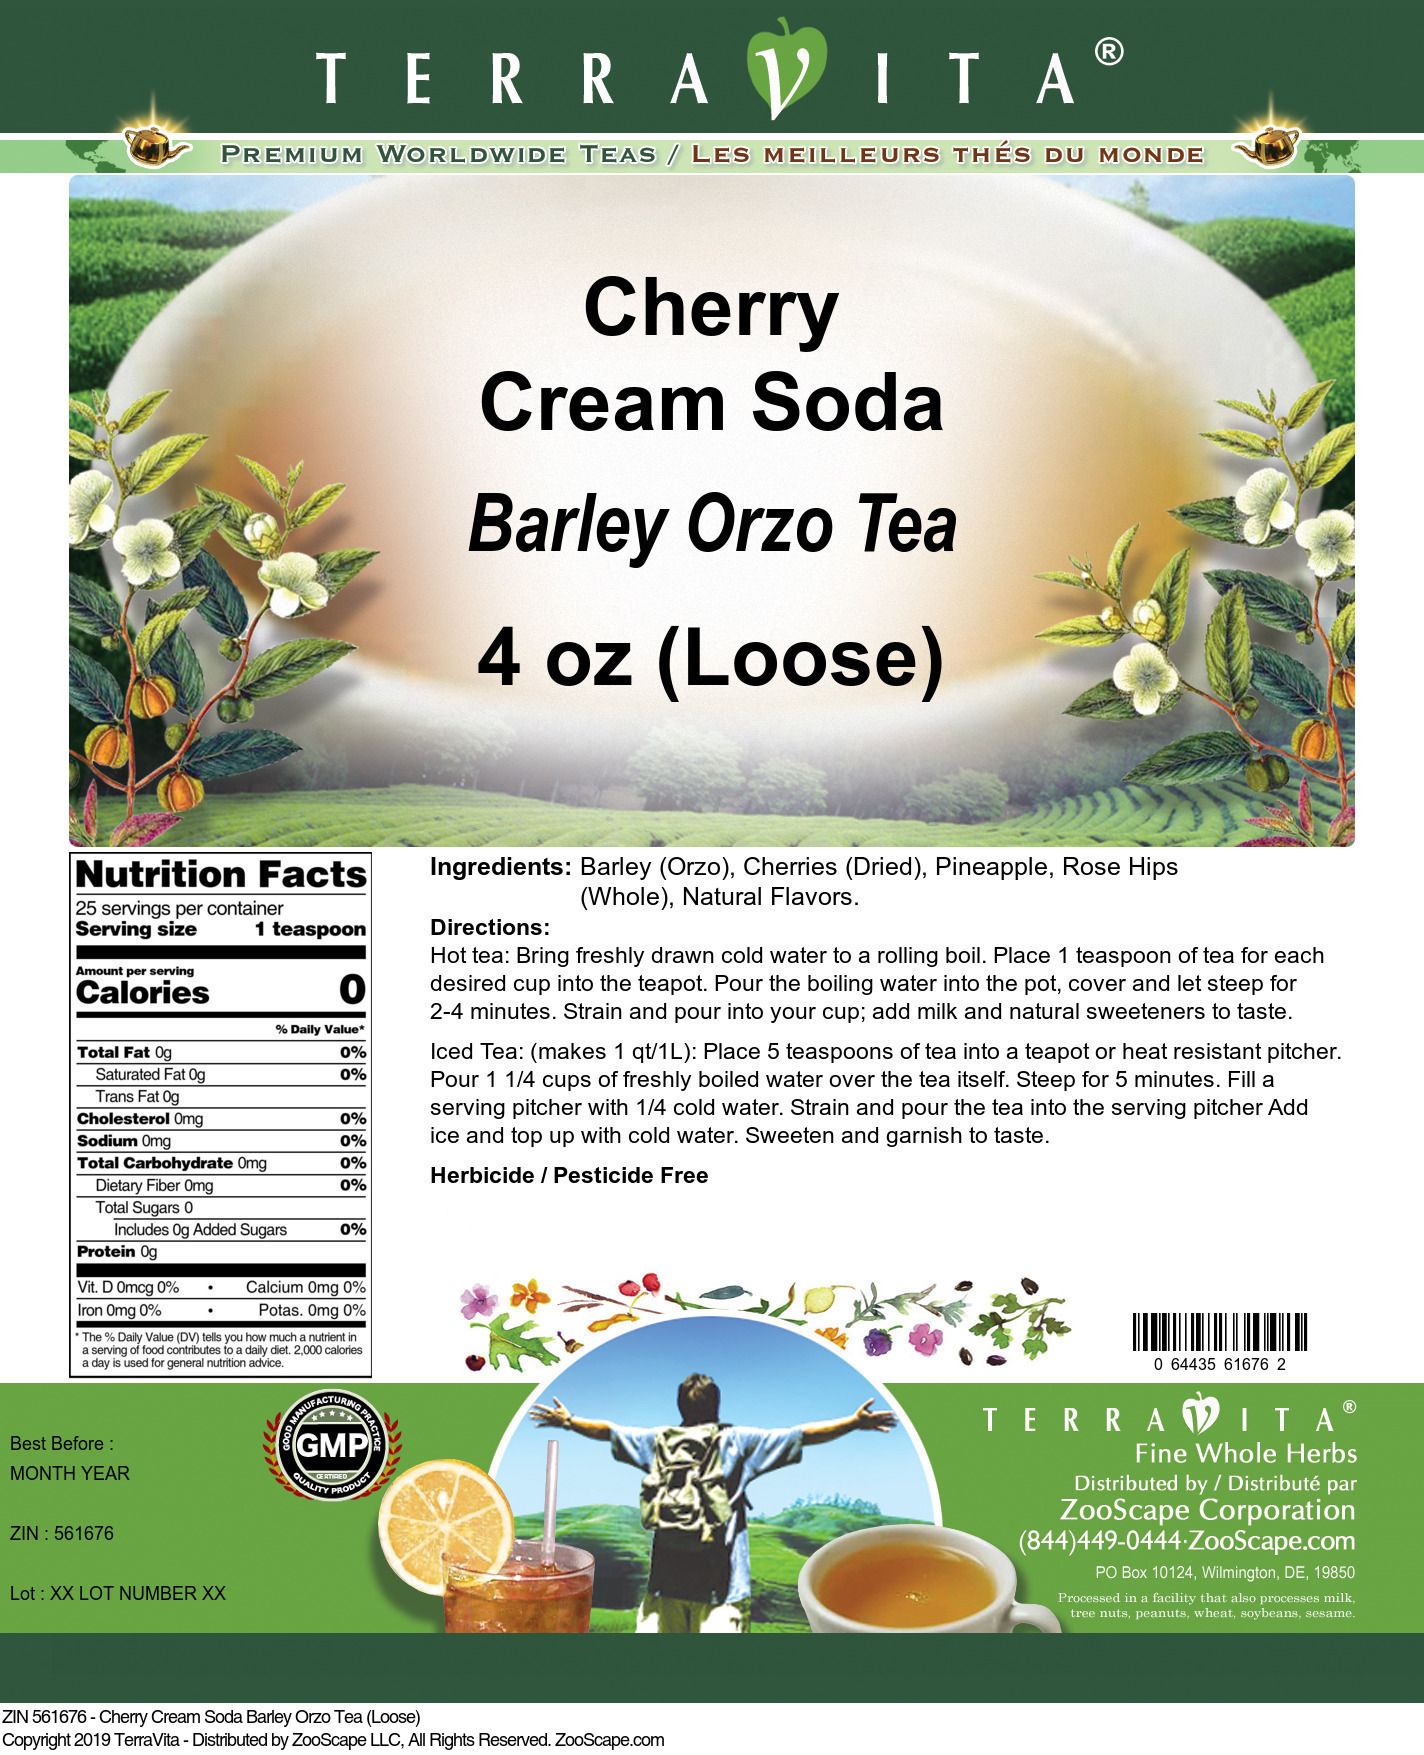 Cherry Cream Soda Barley Orzo Tea (Loose) - Label